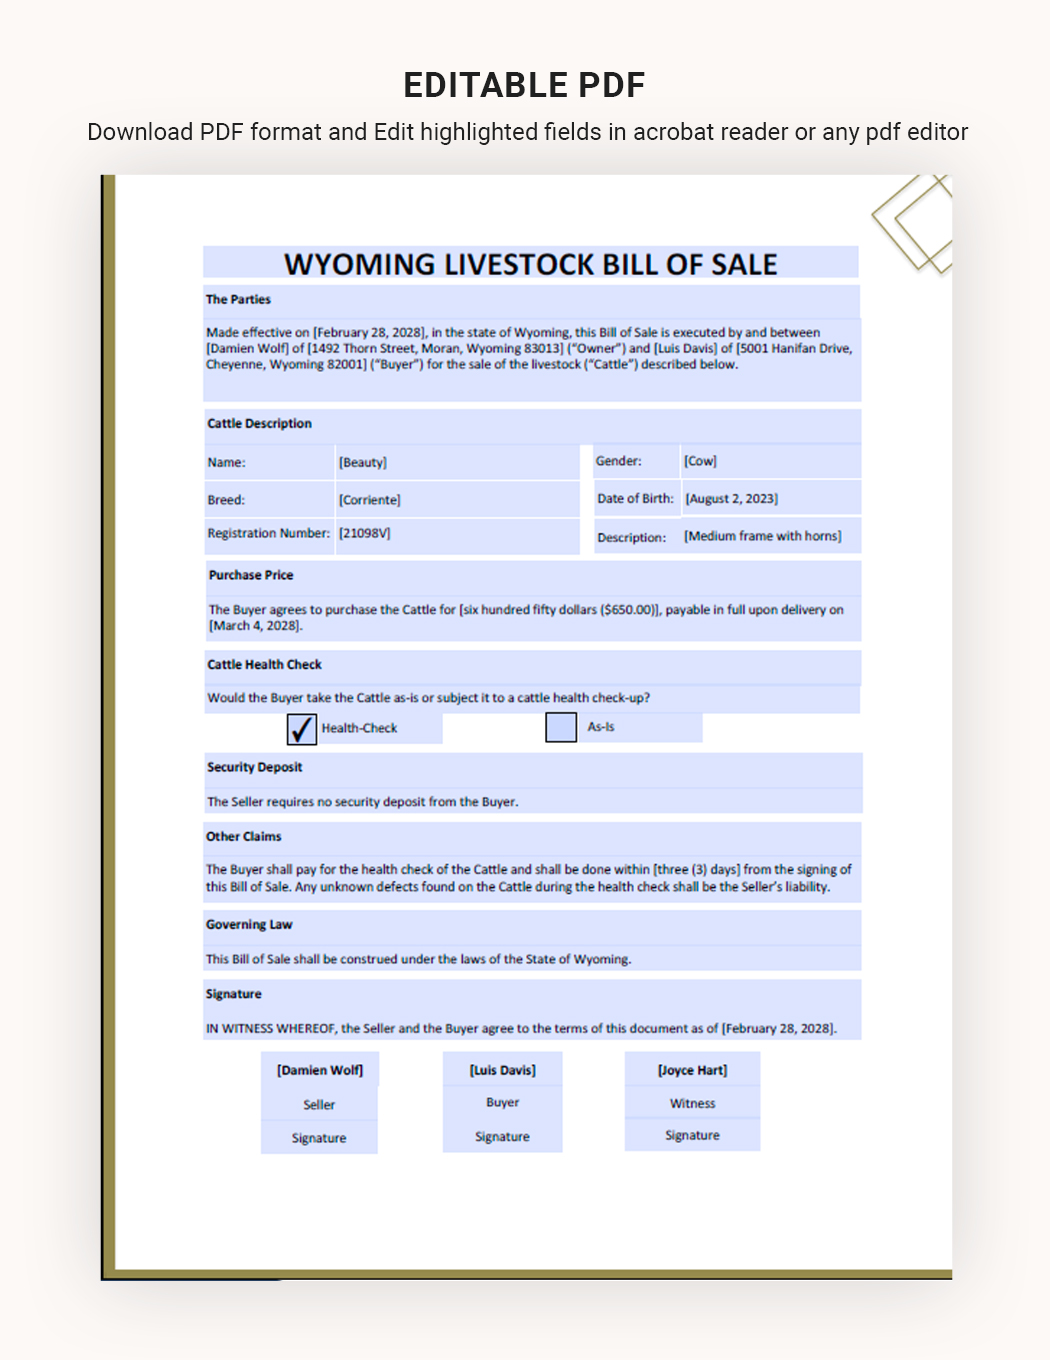 Wyoming Livestock Bill of Sale Template